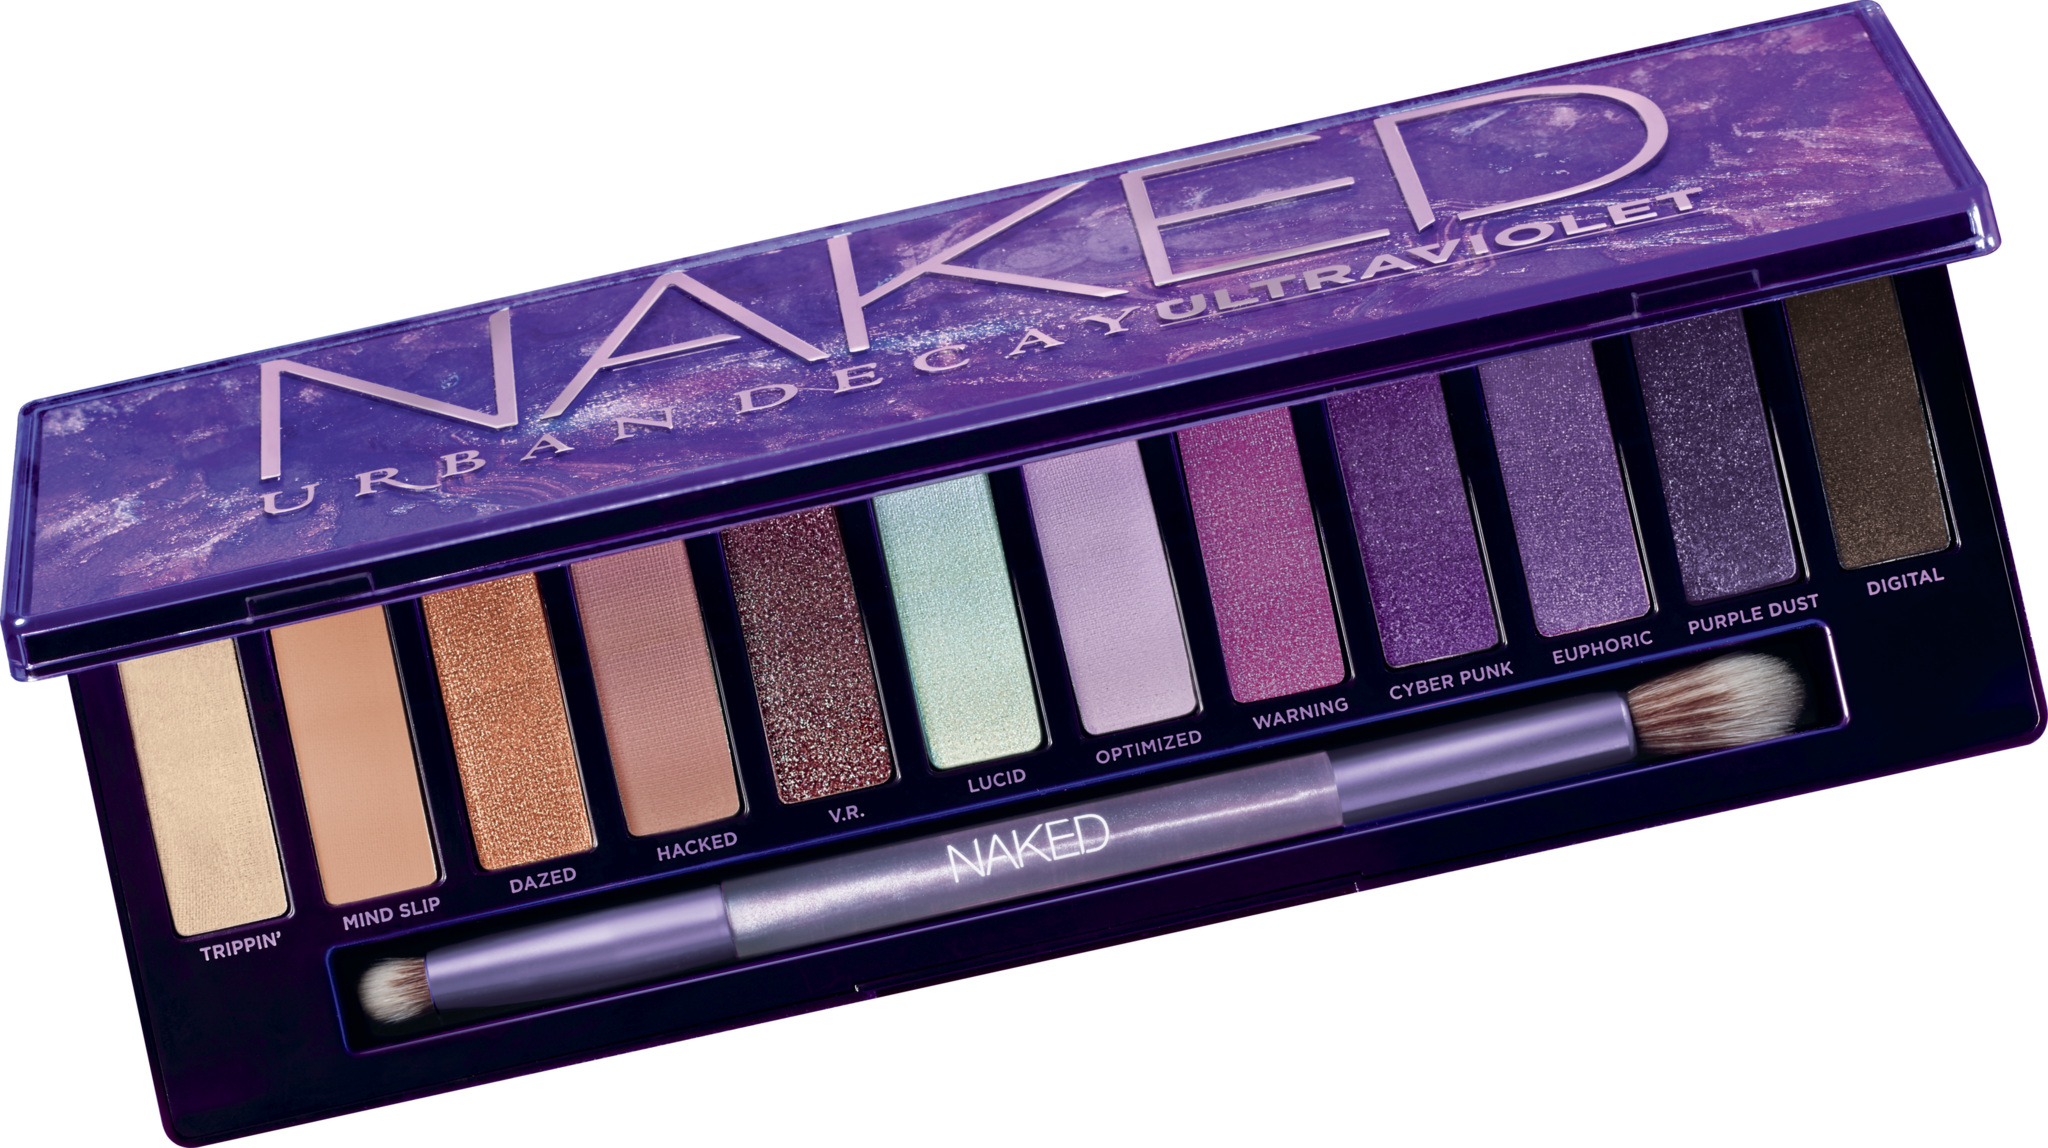 Naked ultra violet eyeshadow palette